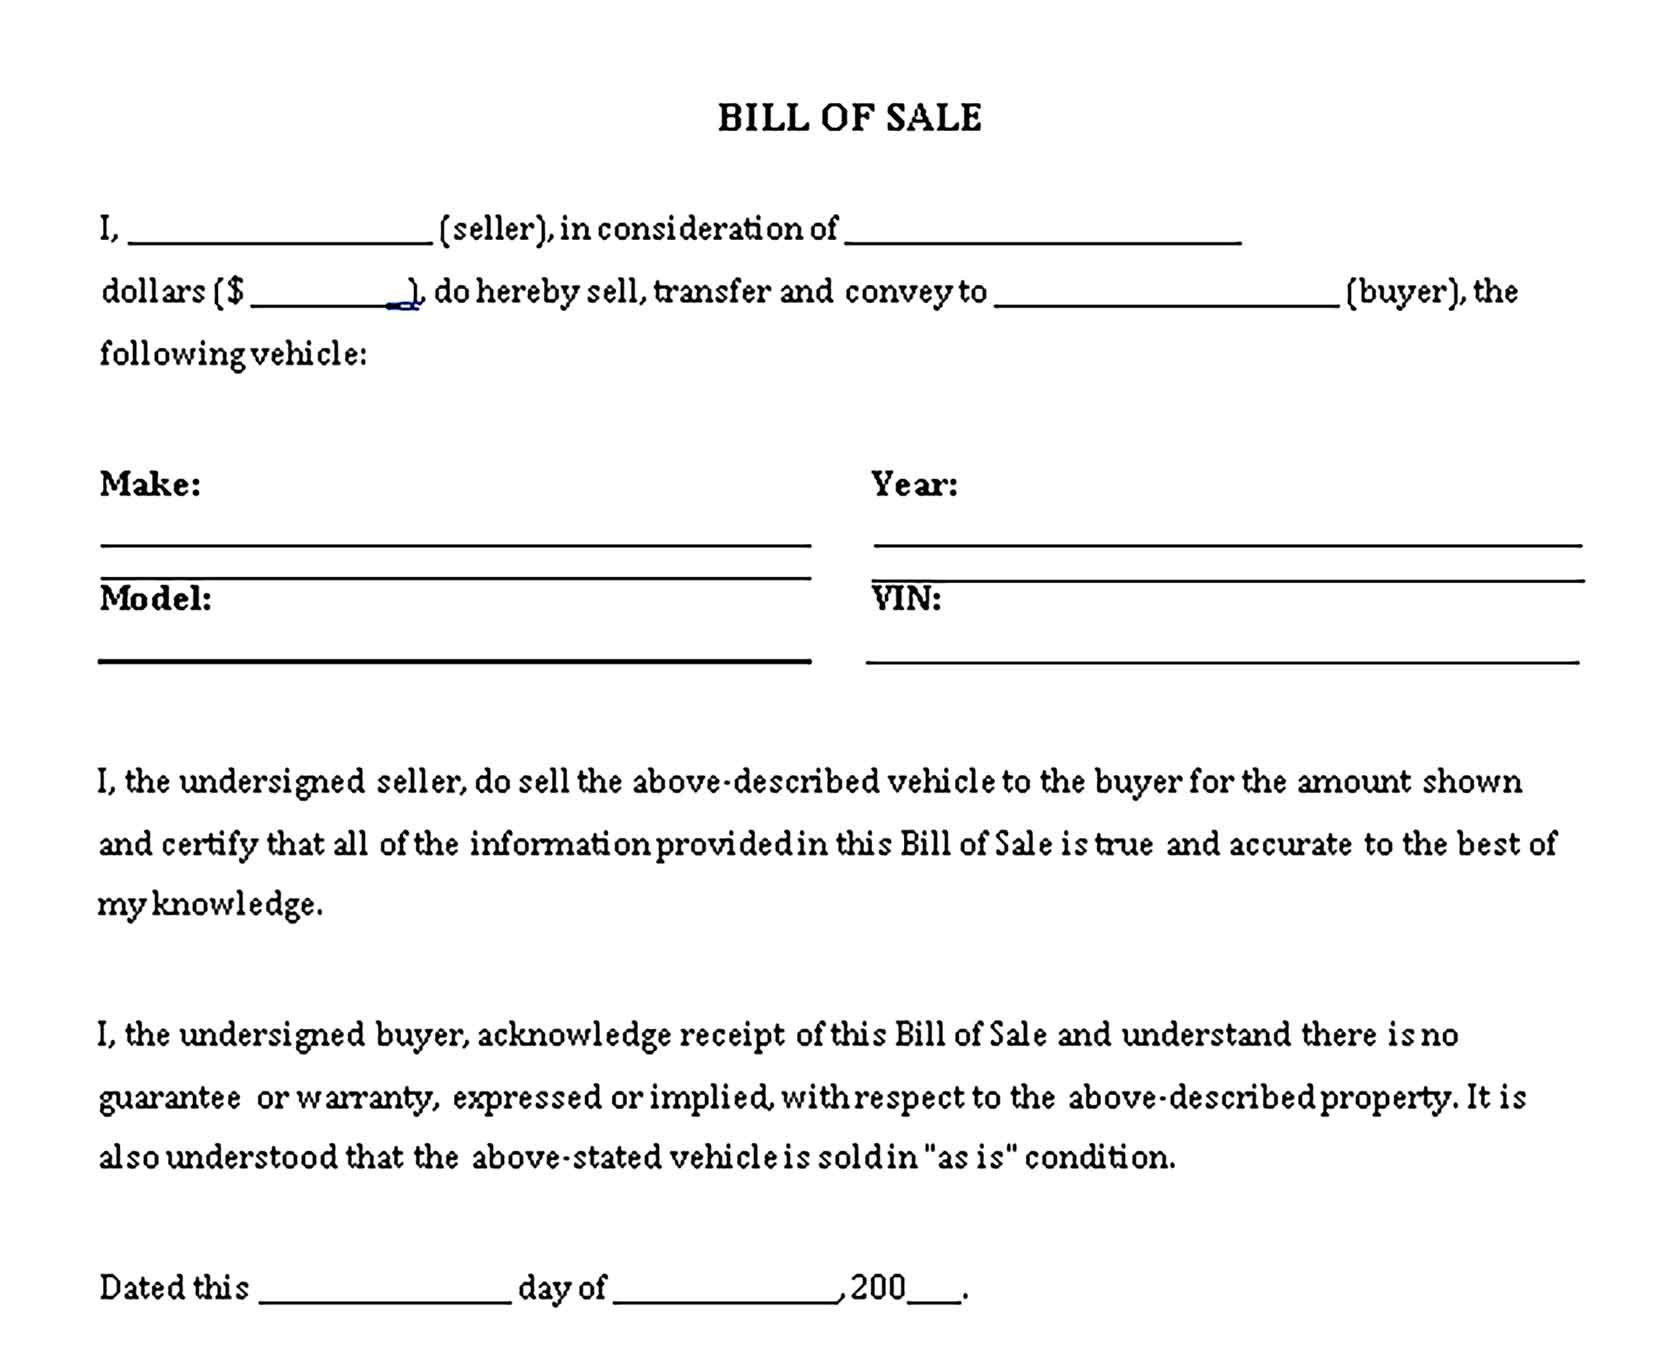 Sample bill of sale general purpose Templates